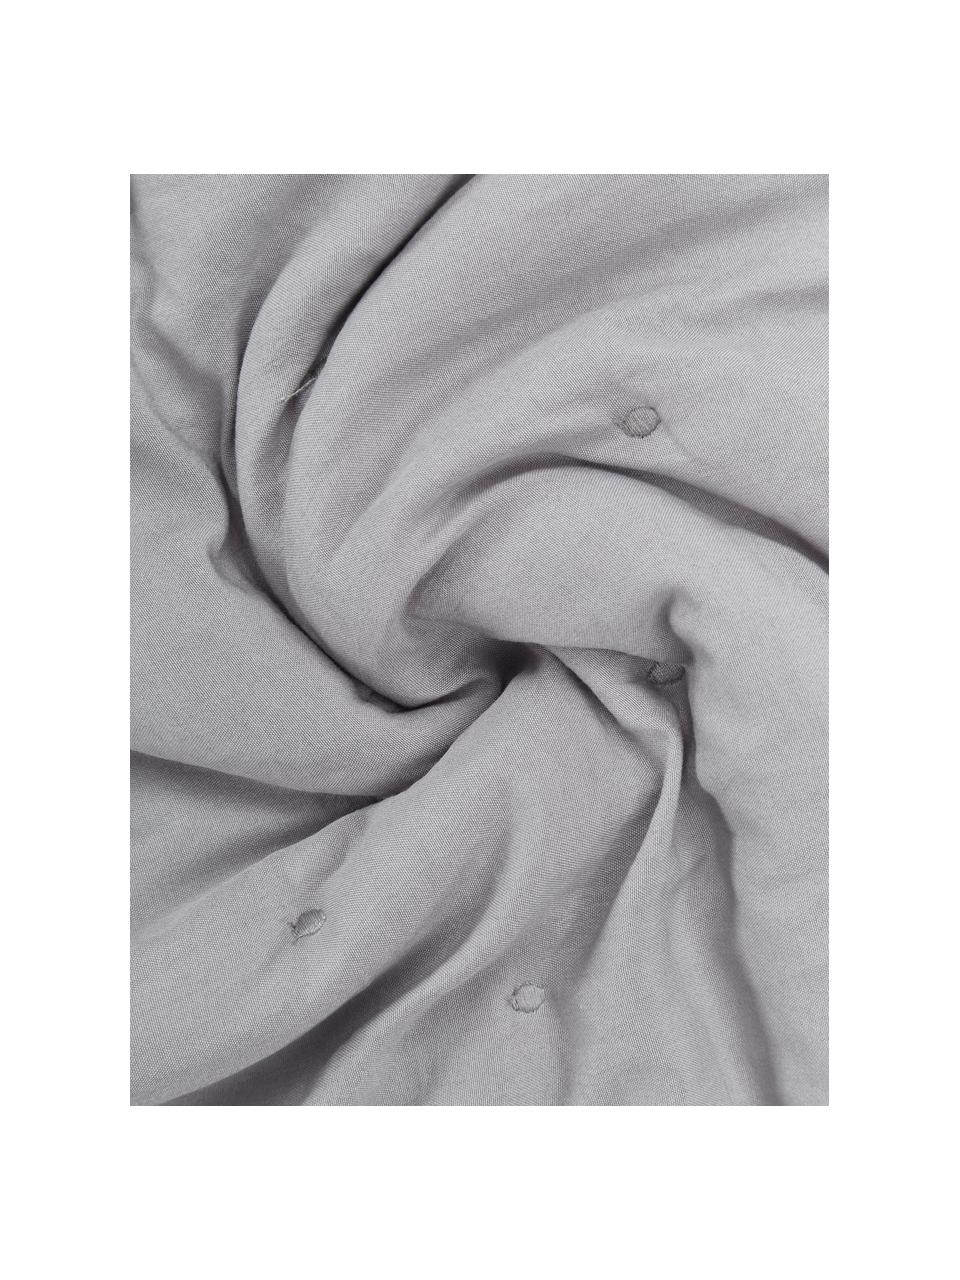 Gesteppte Tagesdecke Wida in Hellgrau, 100% Polyester, Hellgrau, B 260 x L 260 cm (für Betten bis 200 x 200)